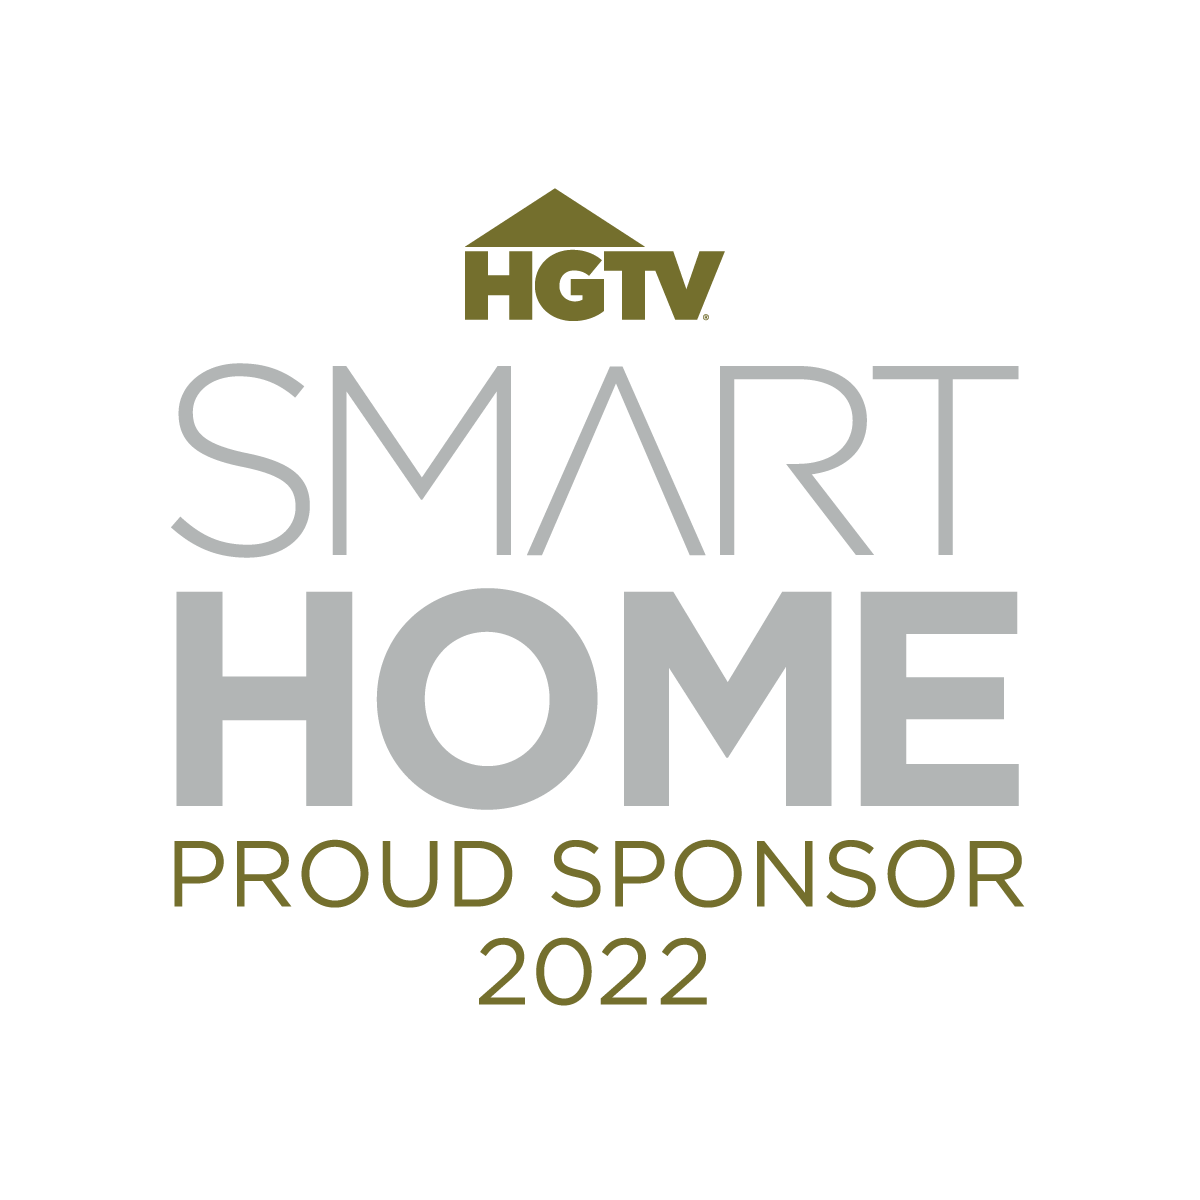 HGTV Smart Home2022 Proud Sponsor stacked 1